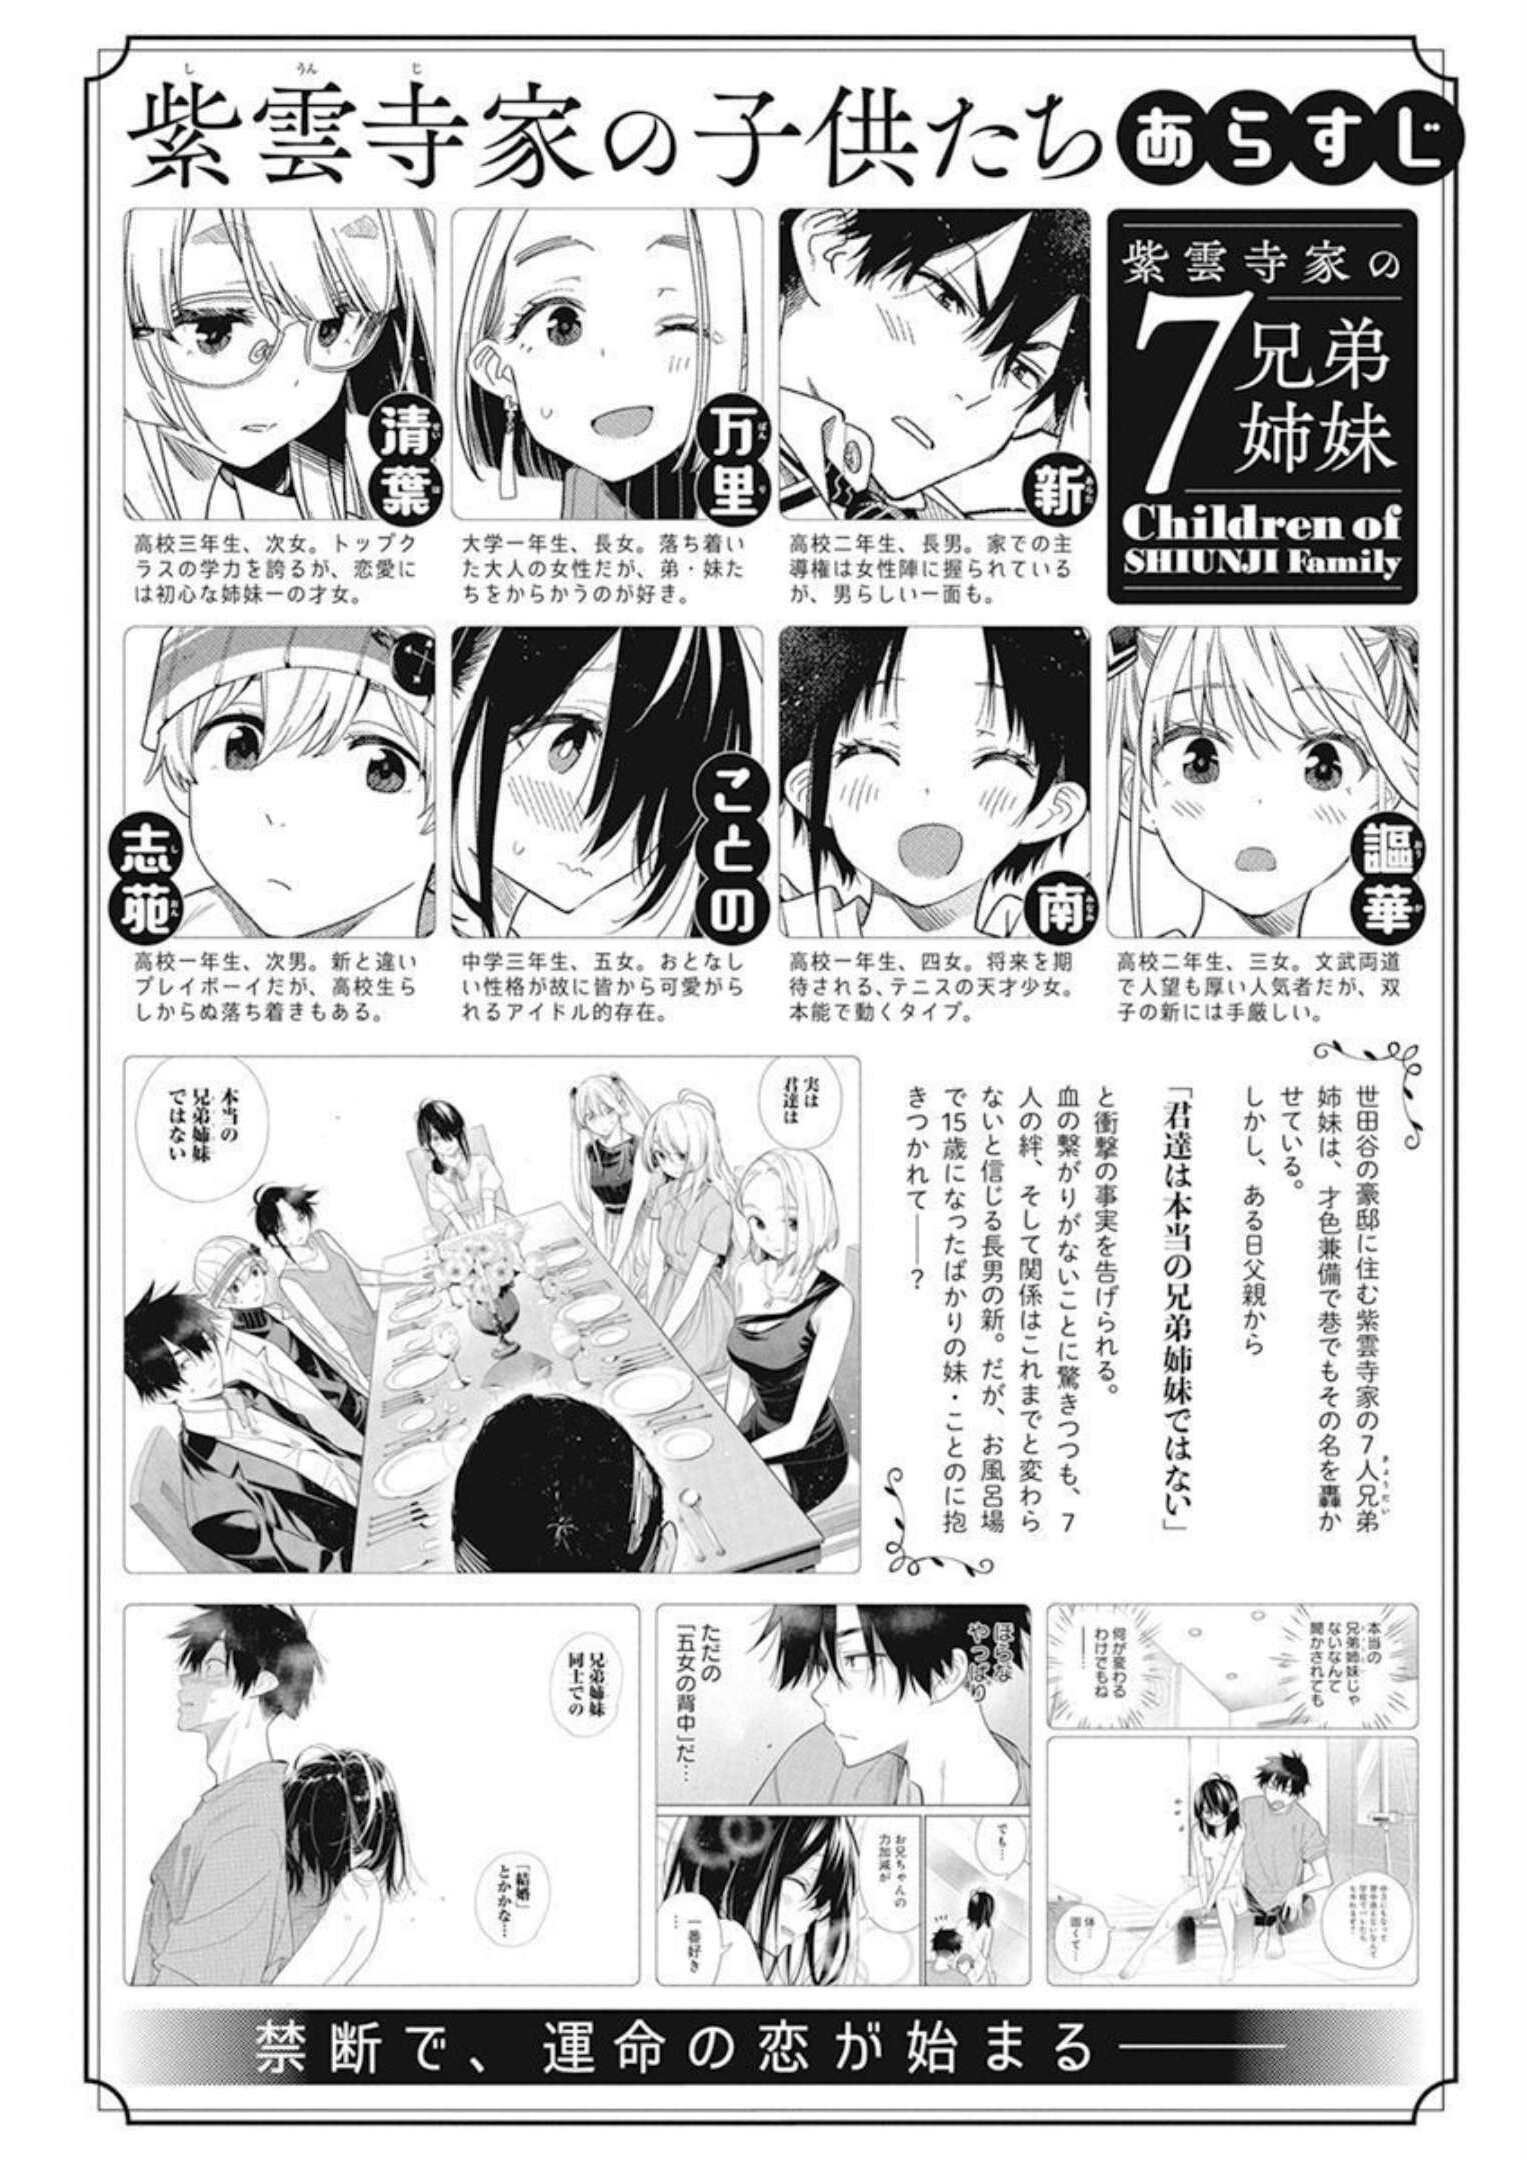 Shiunji-ke no Kodomotachi (Children of the Shiunji Family) - Chapter 03 - Page 1